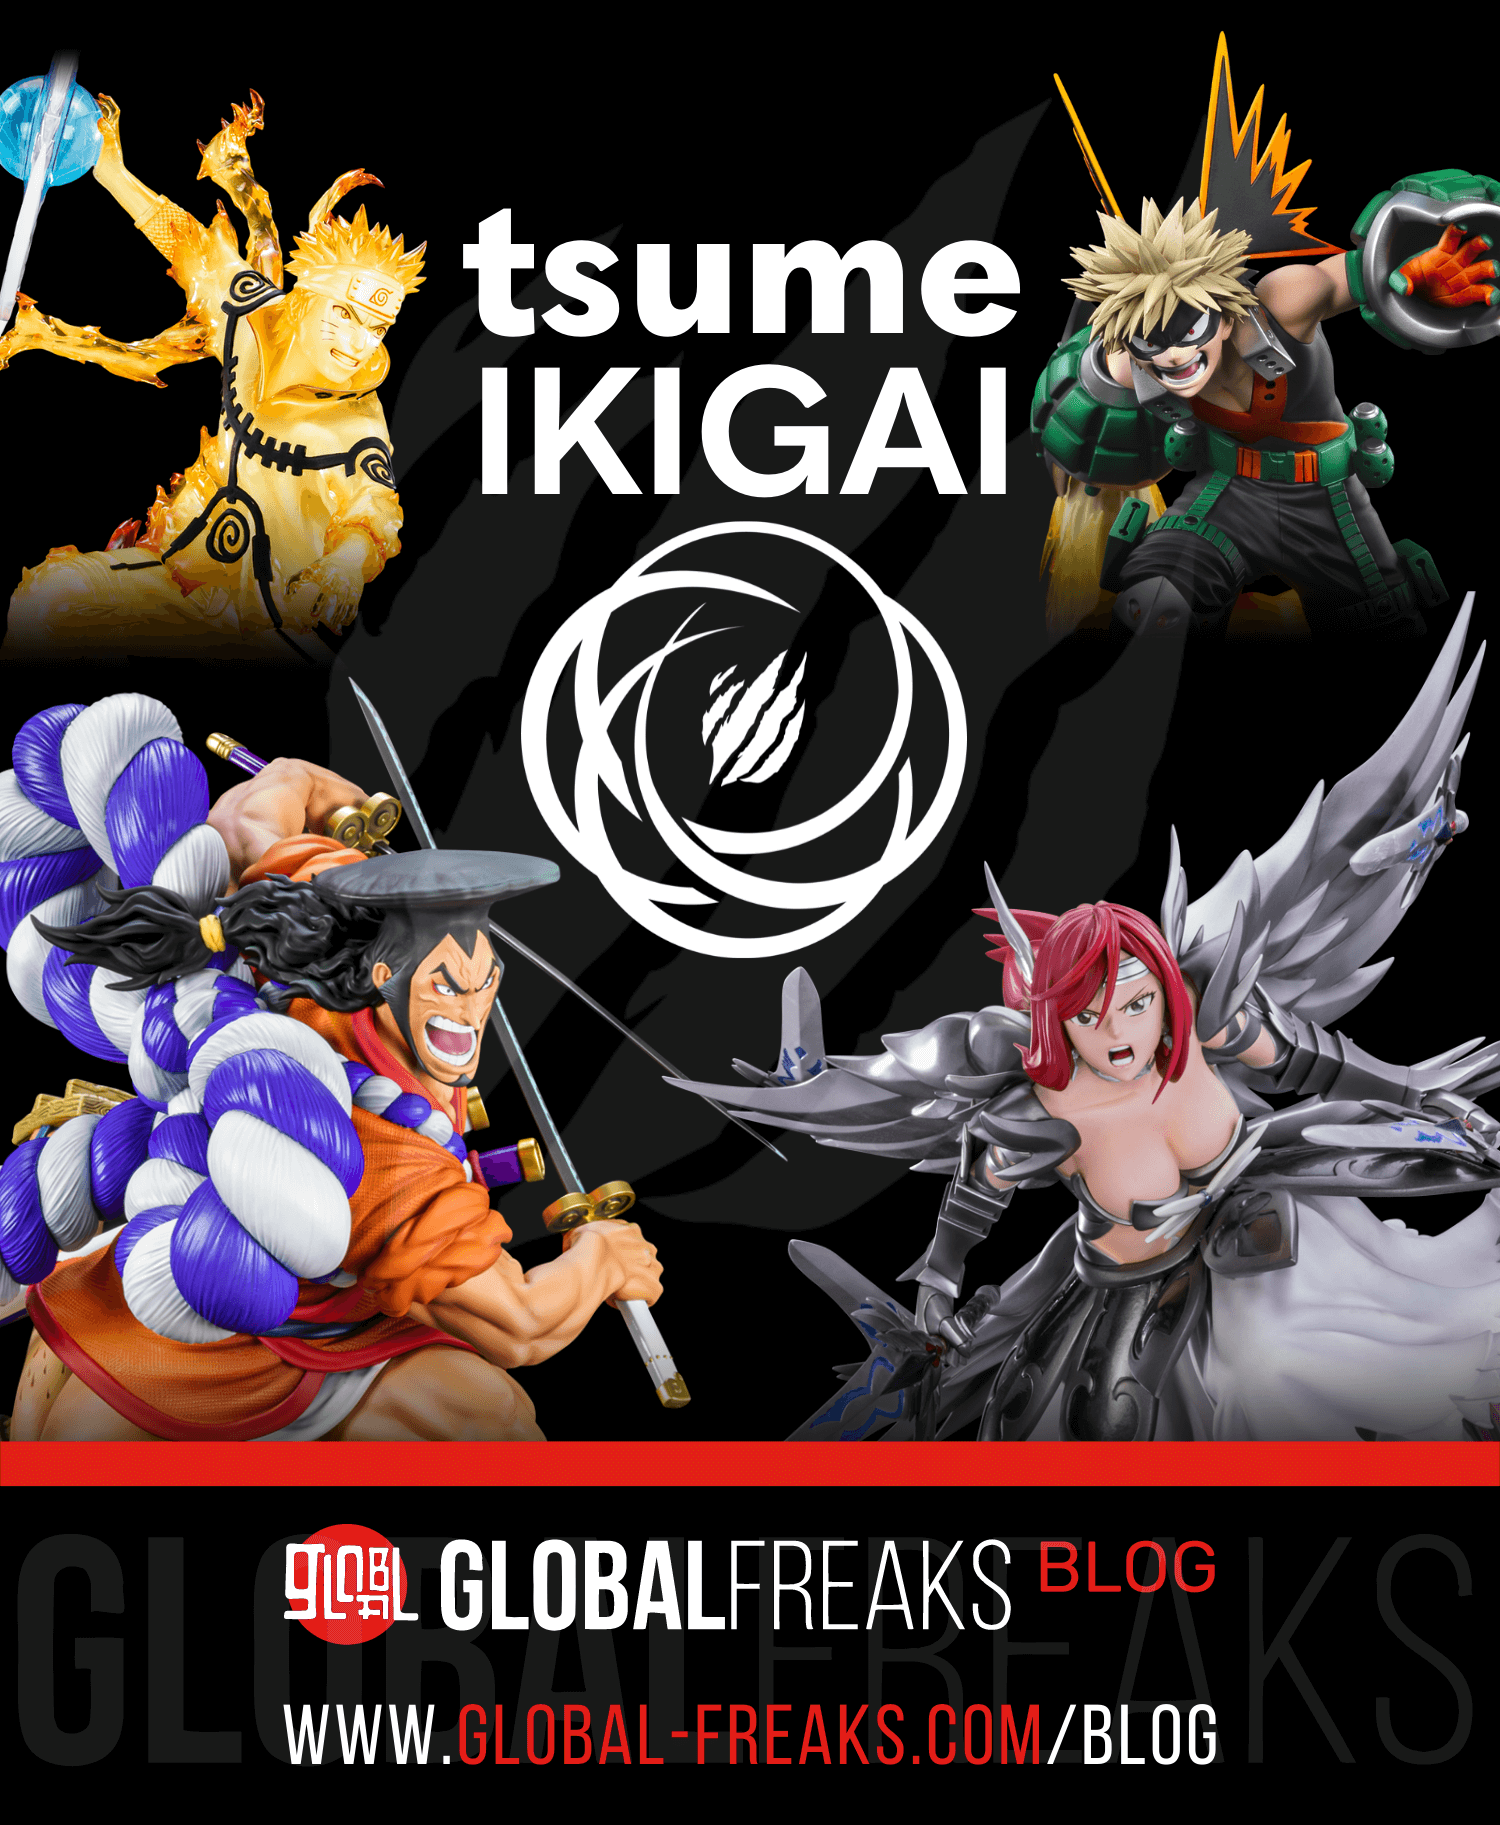 GlobalFreaks: Tsume Ikigai